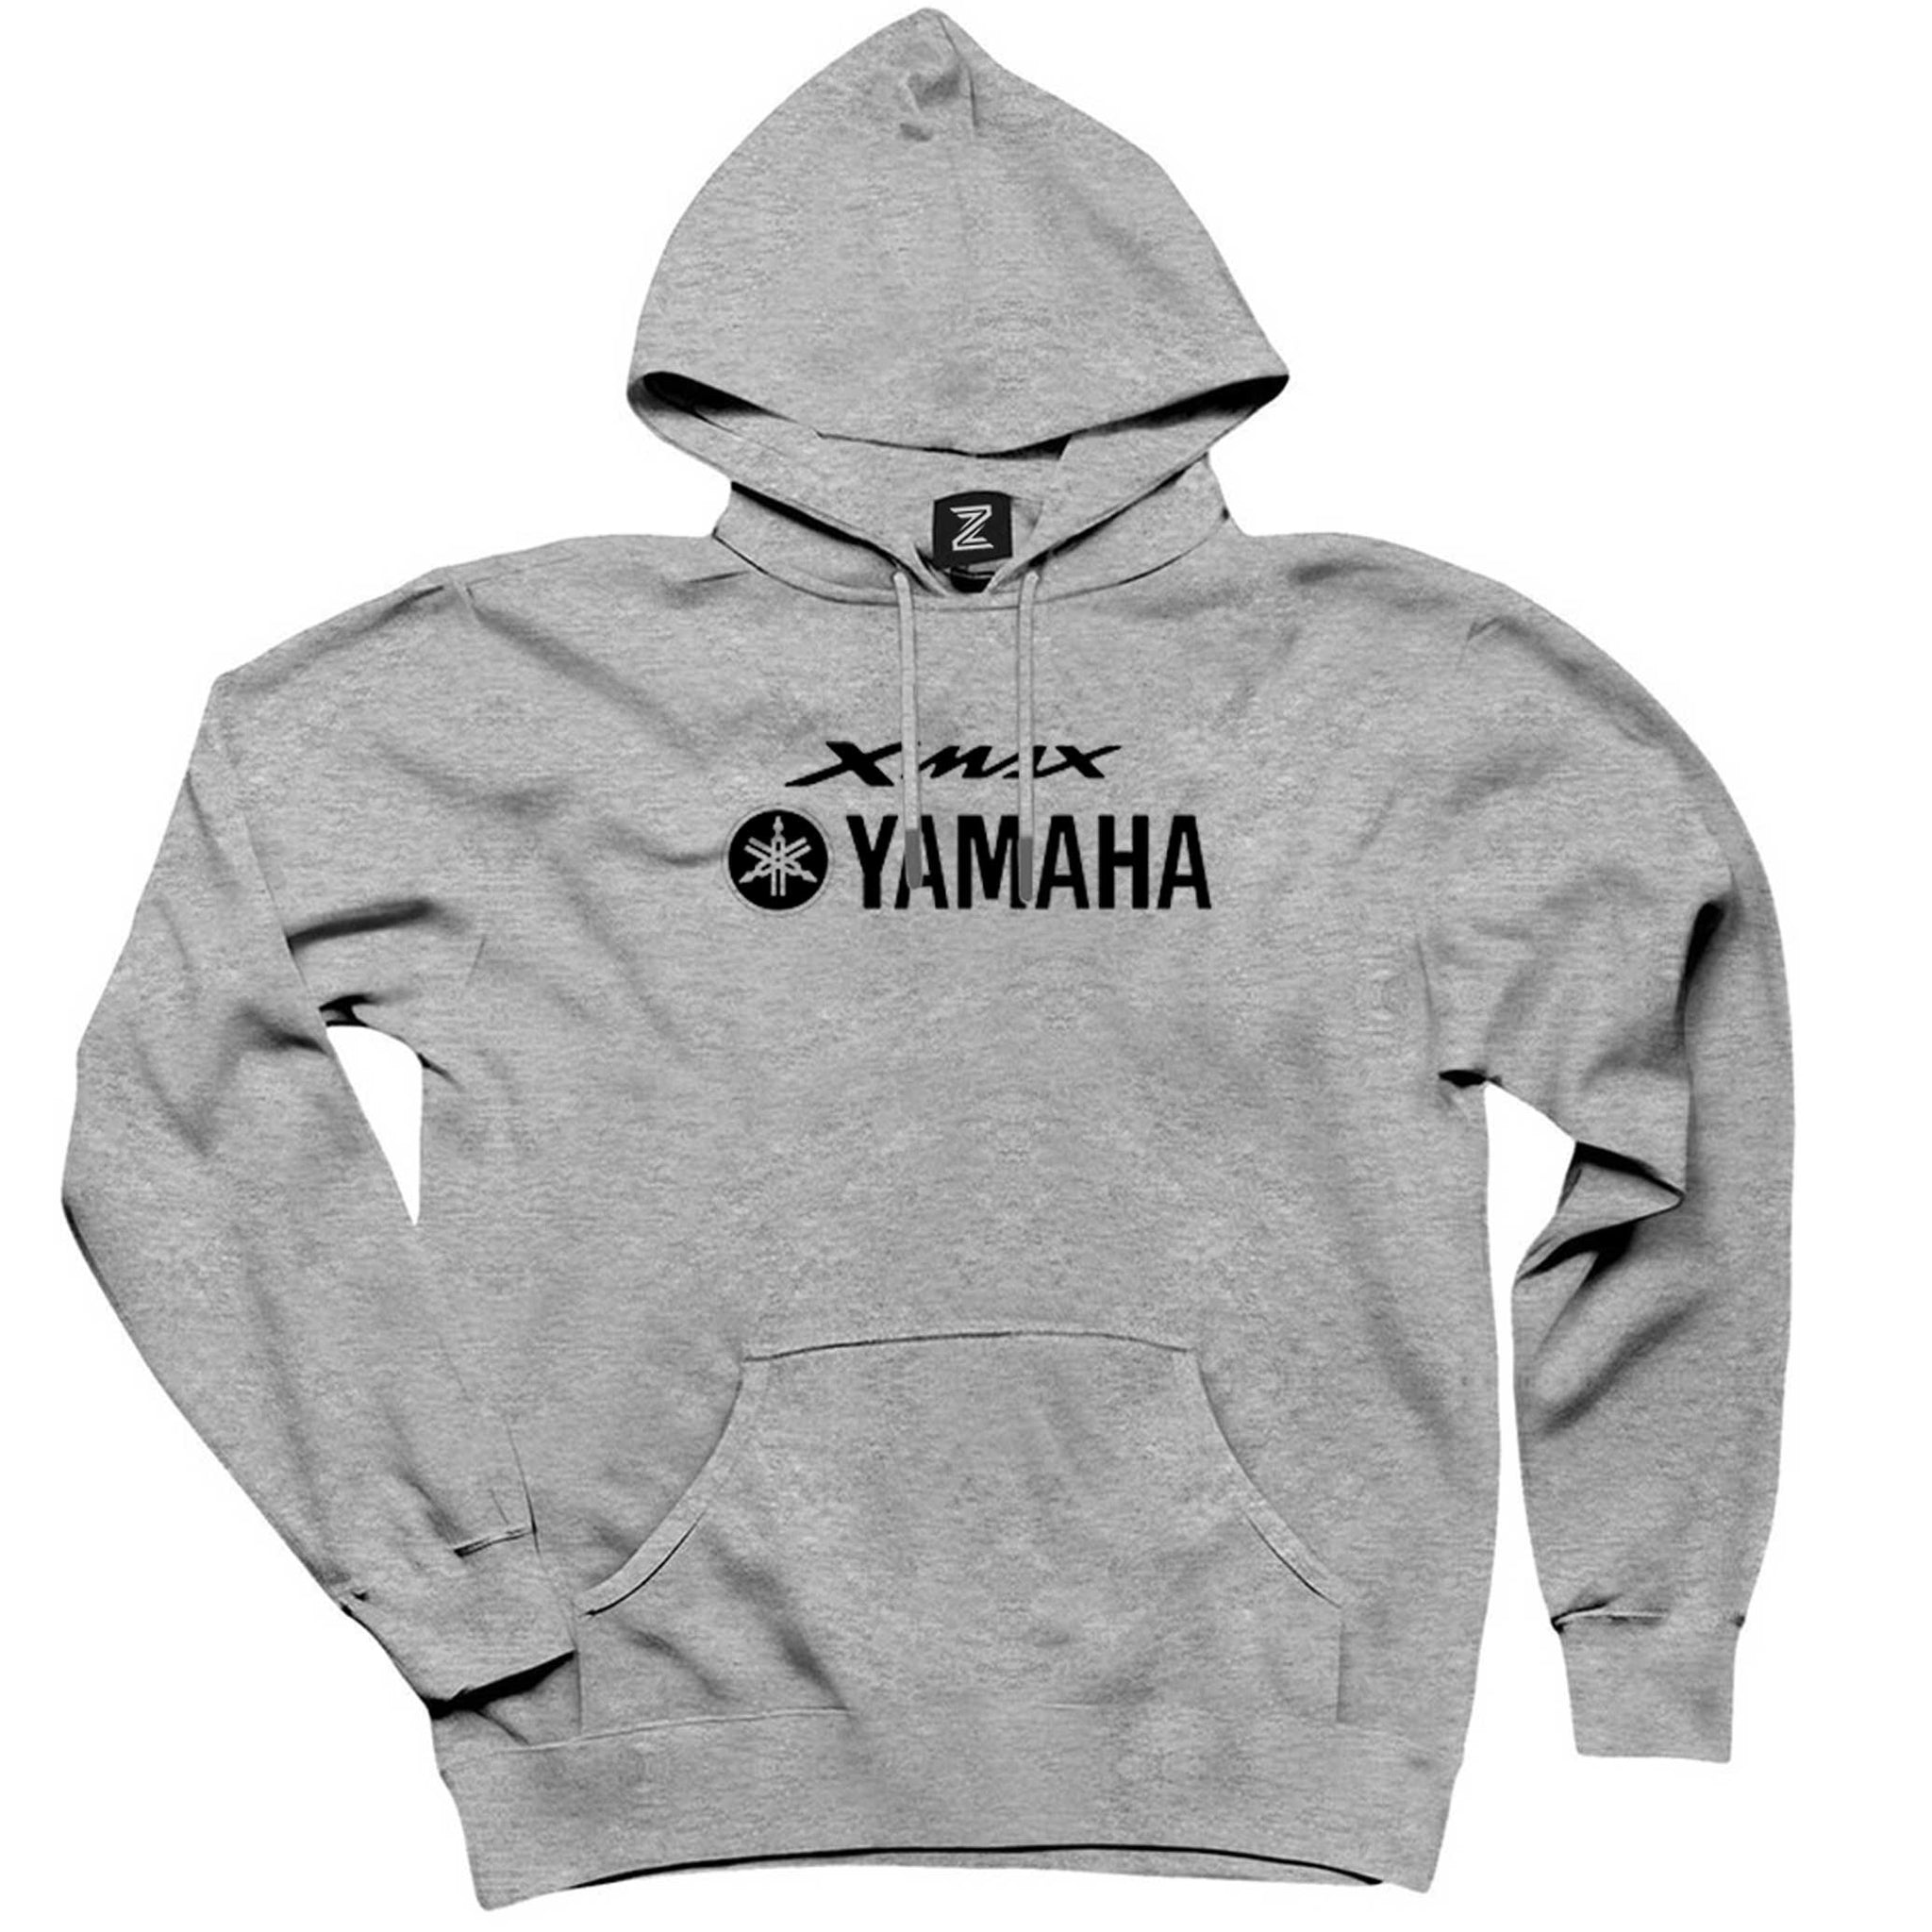 Yamaha Xmax Text Gri Kapşonlu Sweatshirt Hoodie